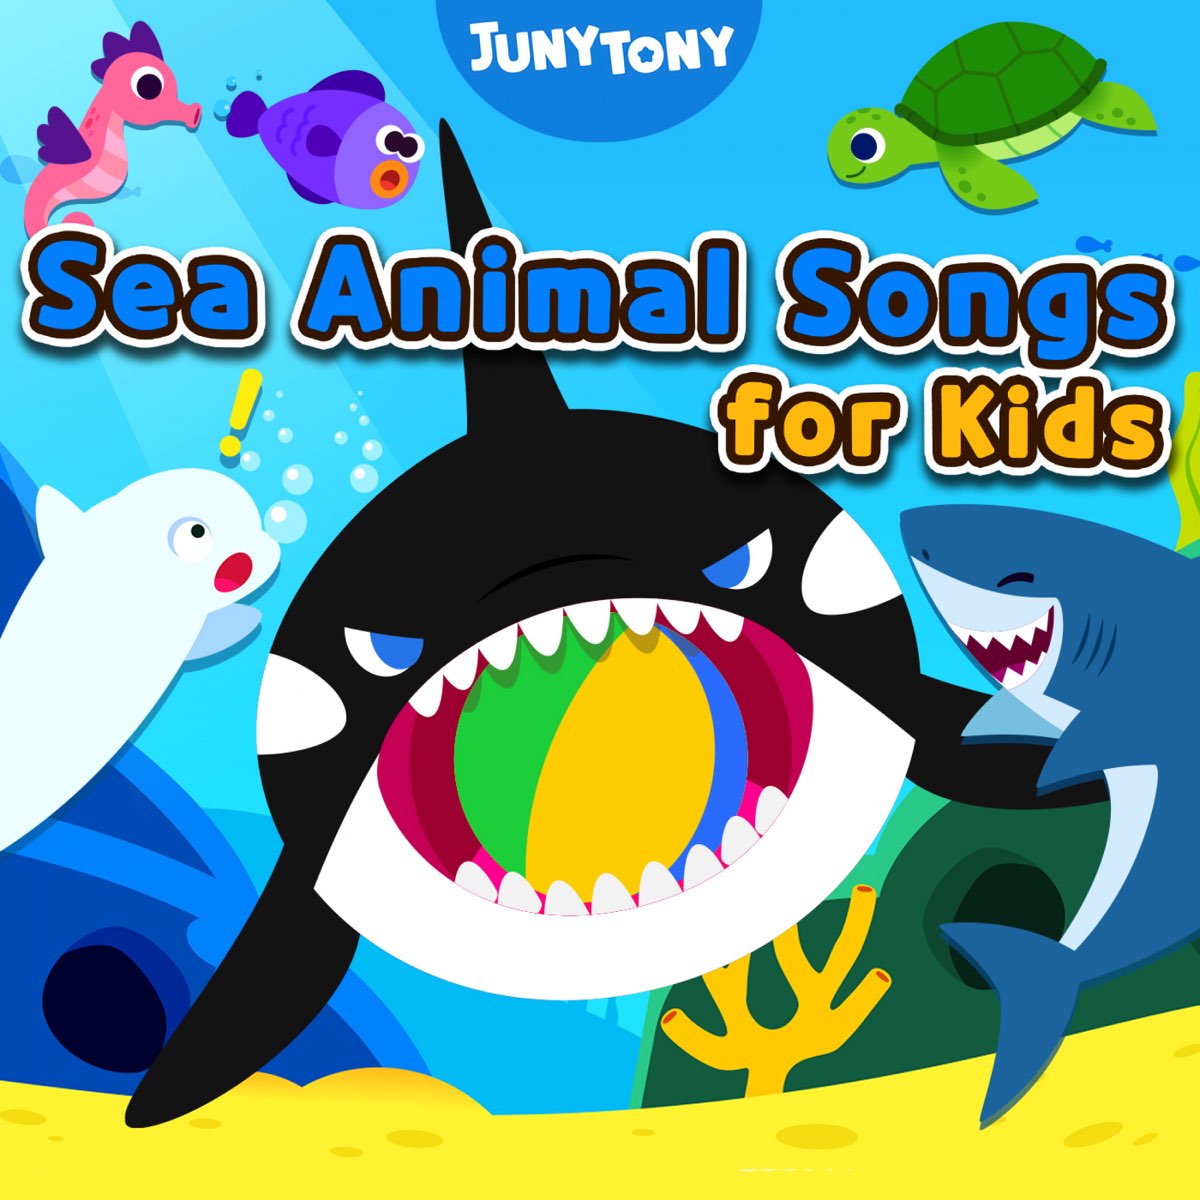 Sea Animal Songs for Kids by JunyTony on Apple Music